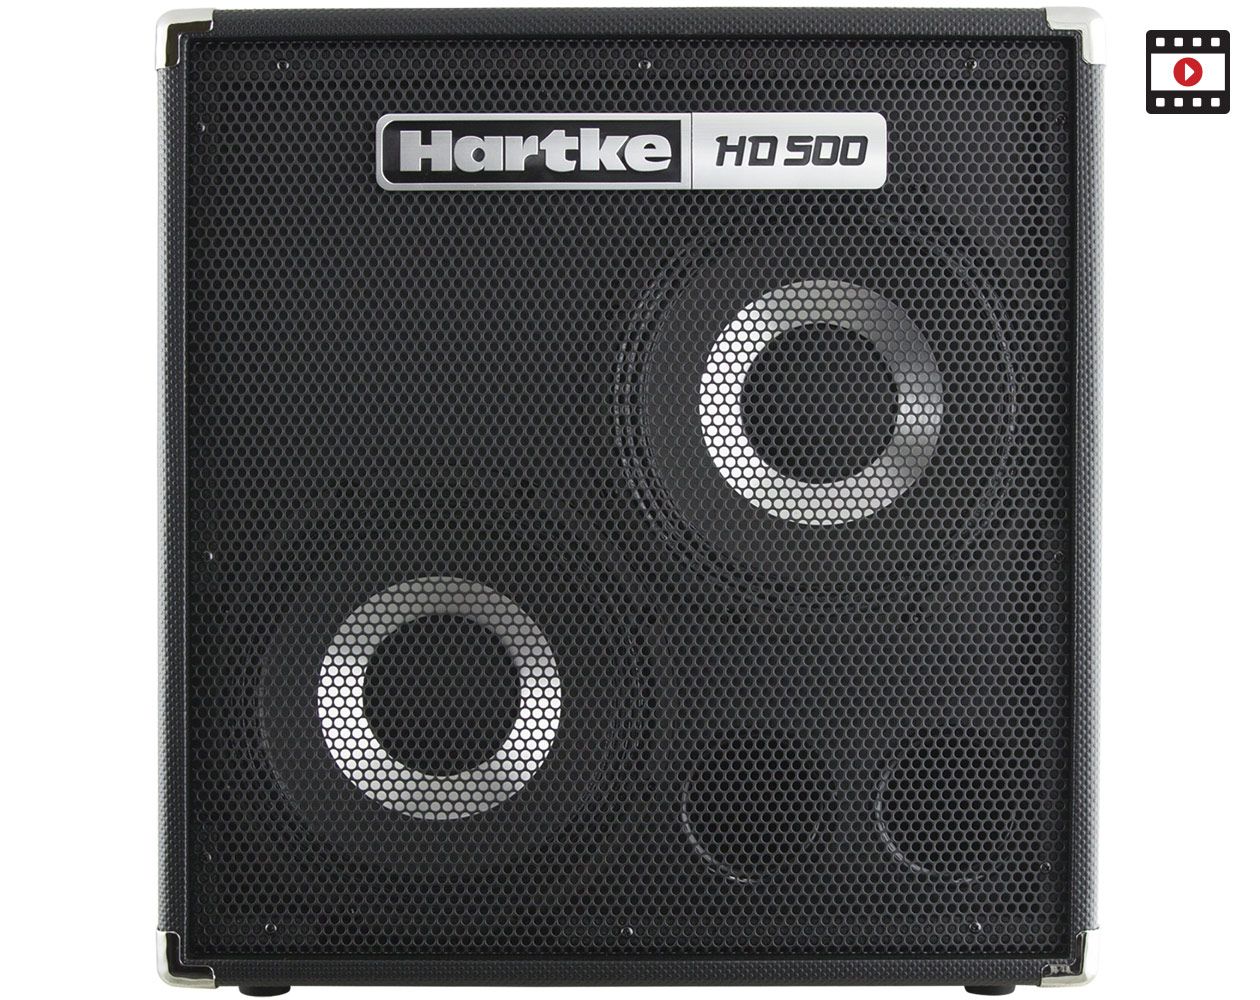 Hartke HD500 Review